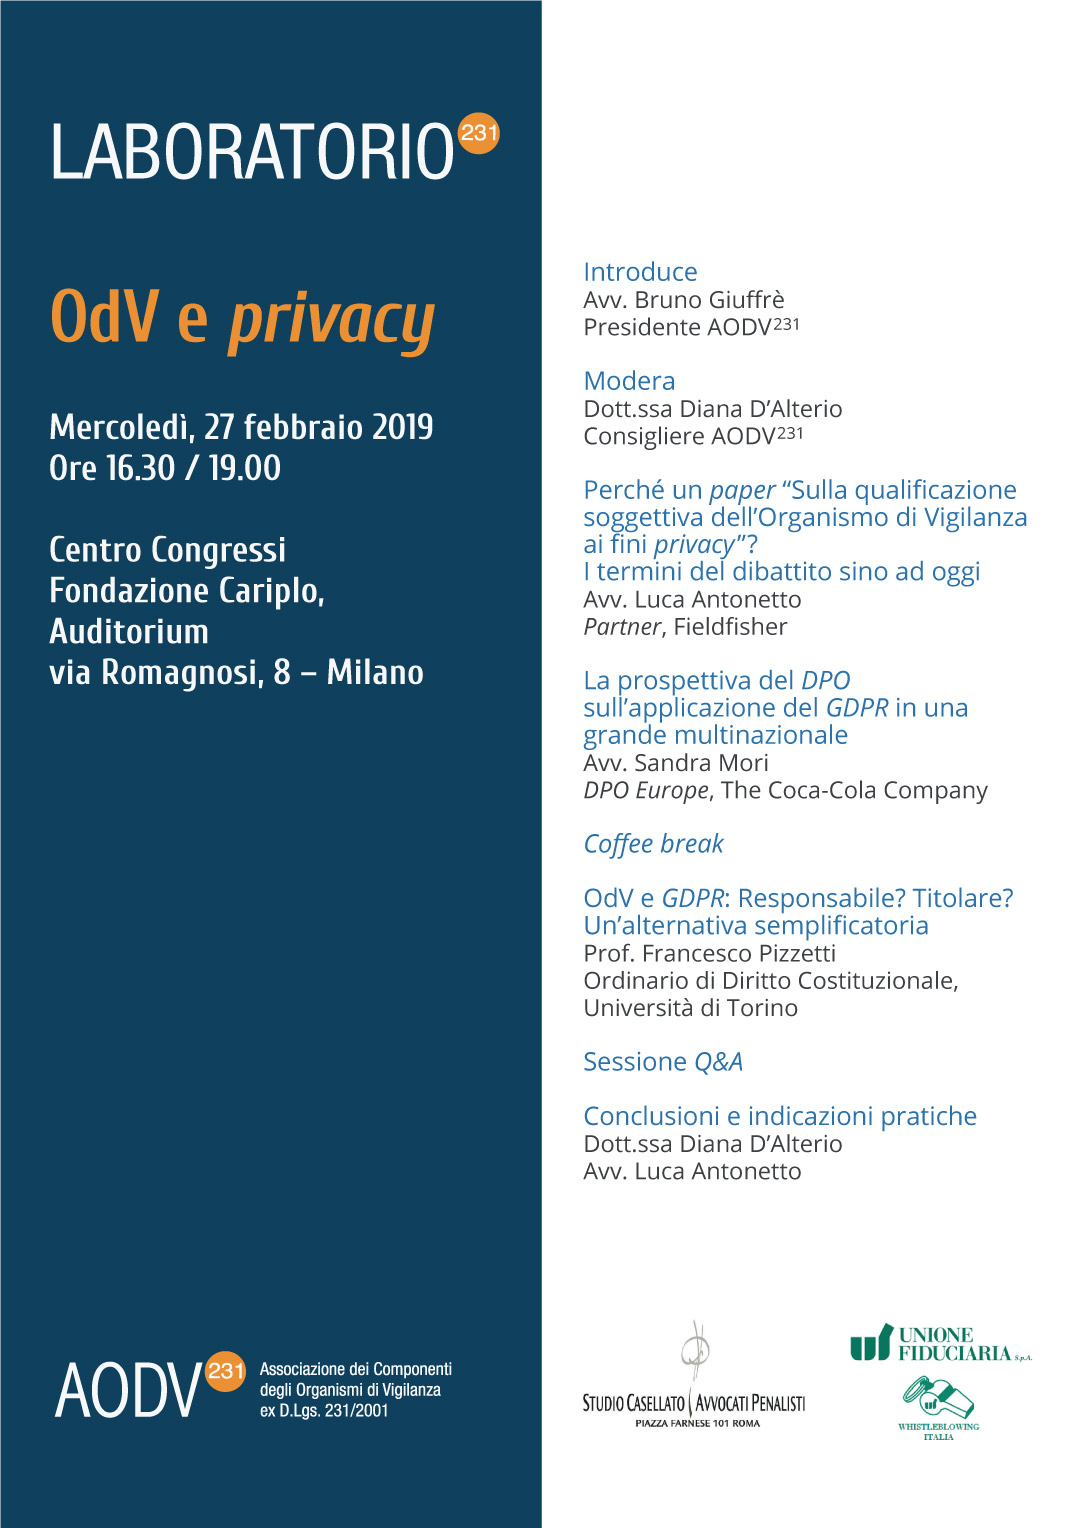 OdV e privacy